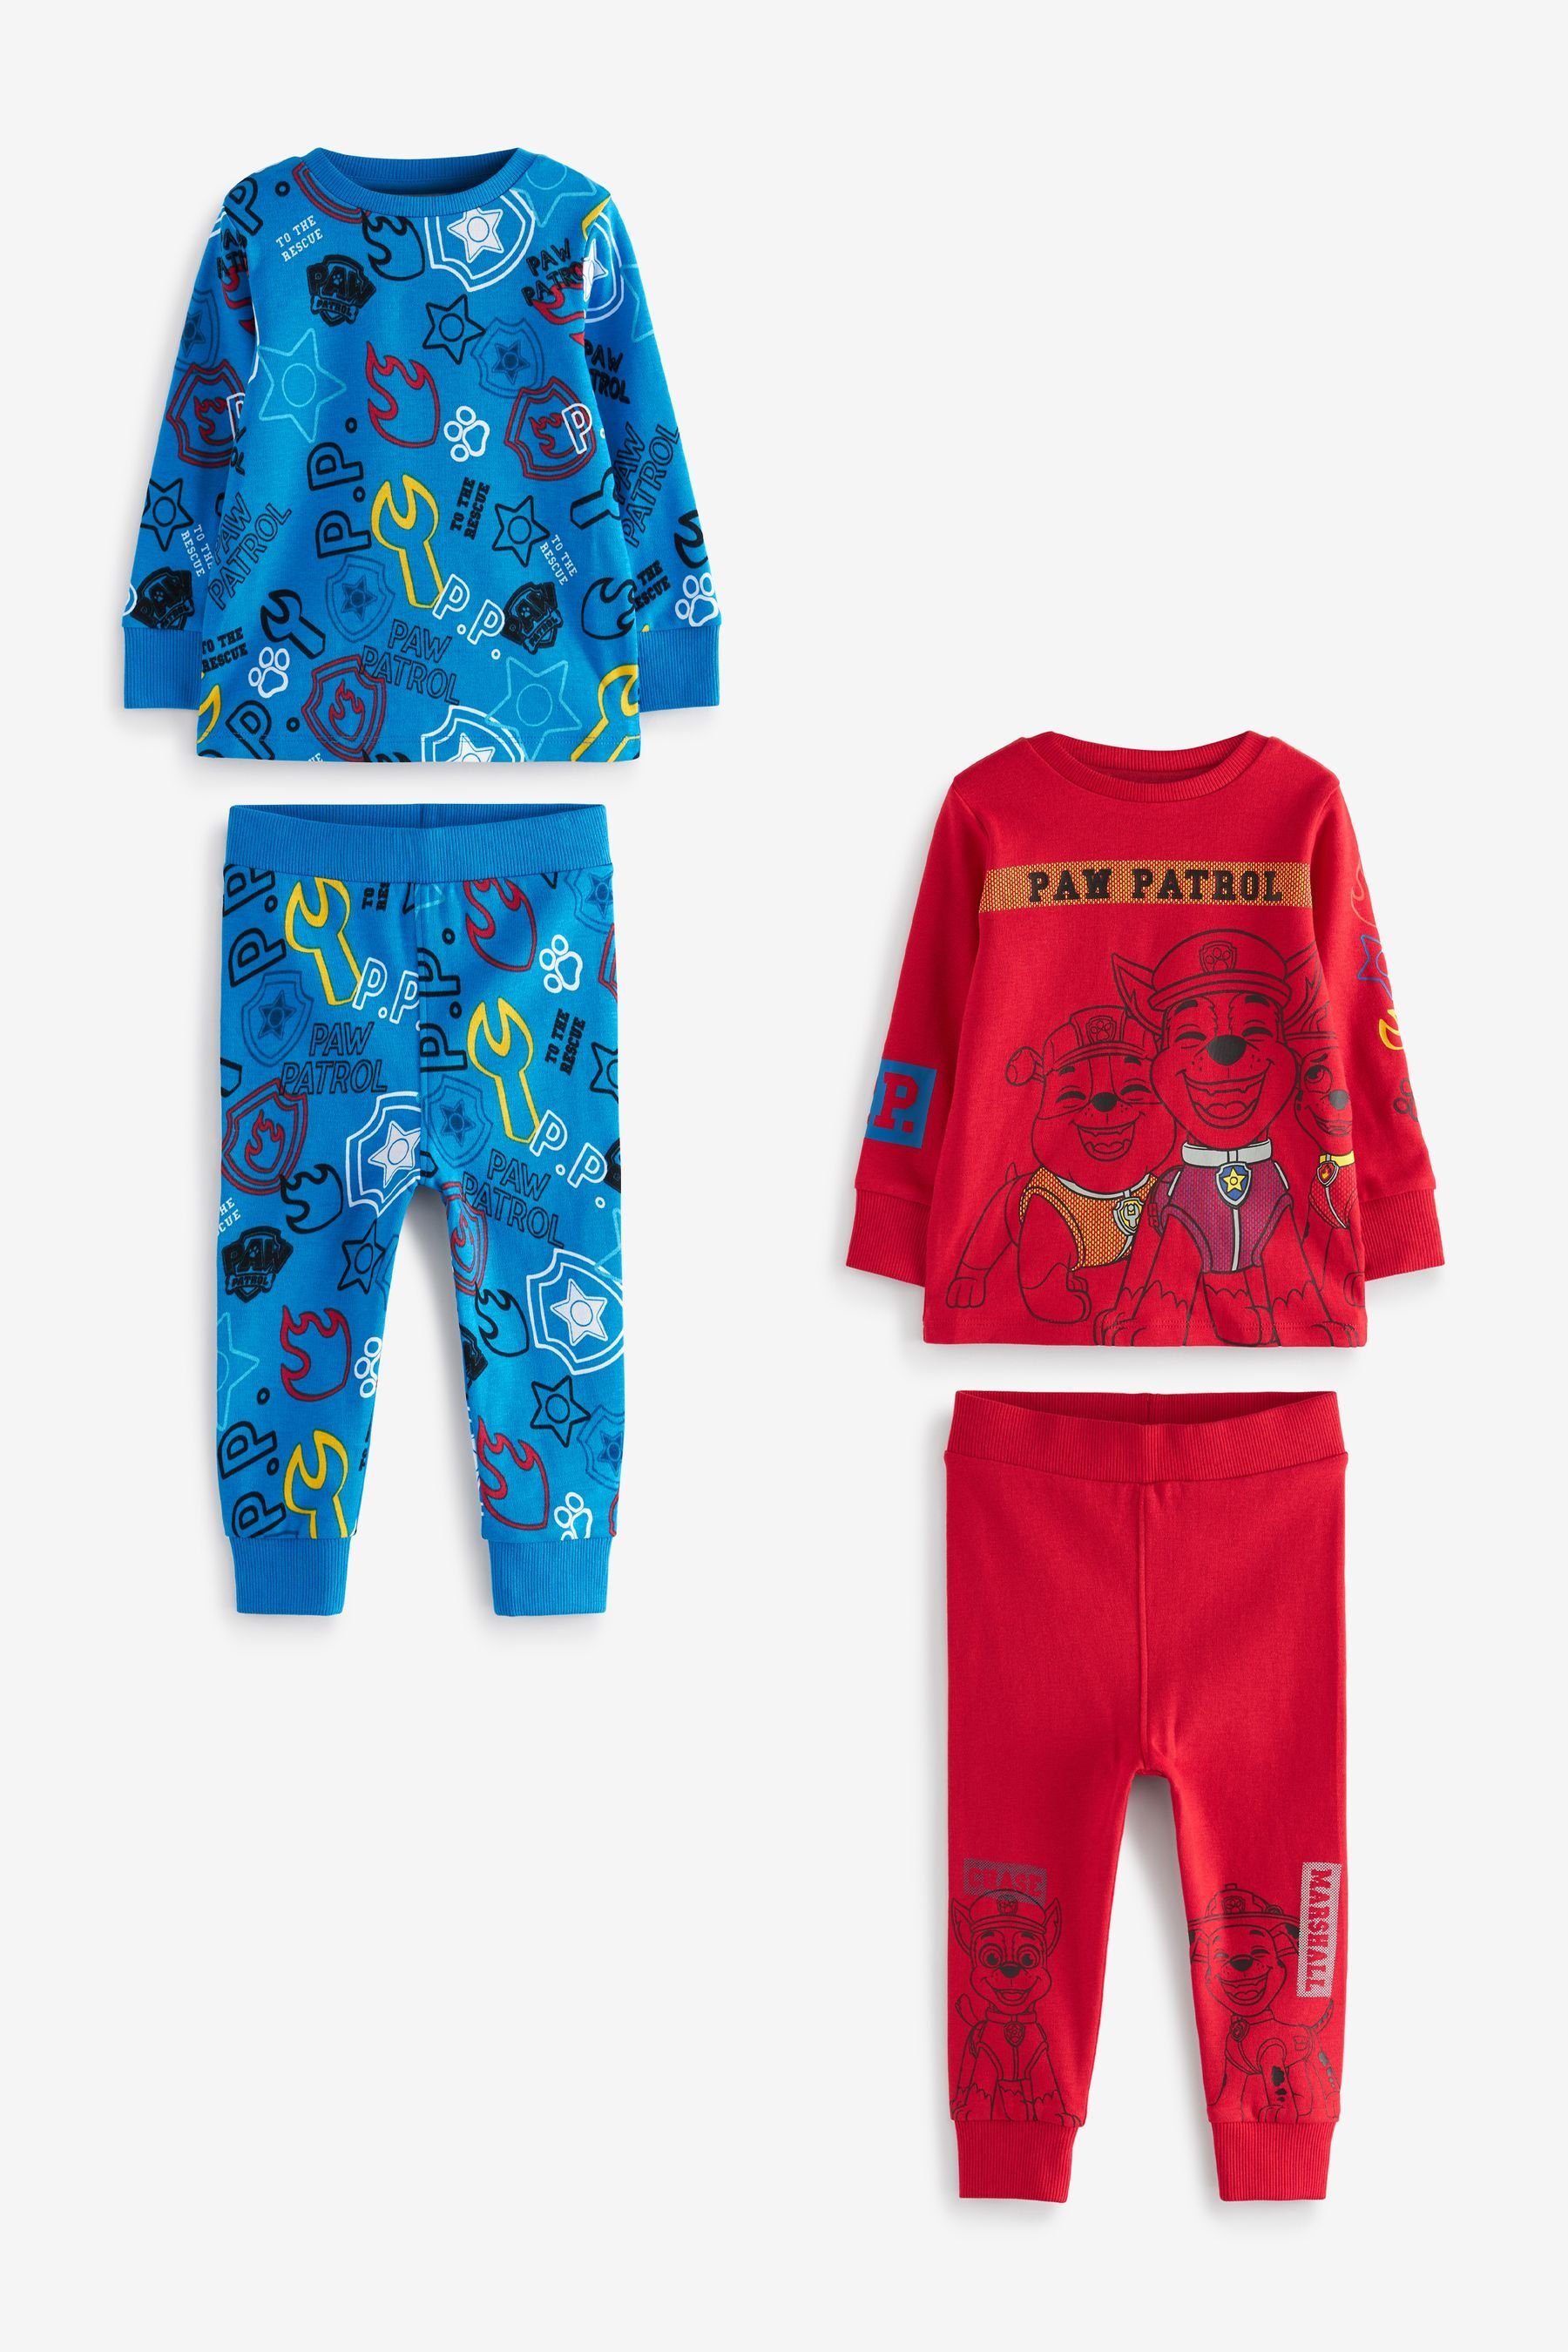 Next Pyjama Kuschelpyjama, 2er-Pack (4 tlg) PAW Patrol Red/Blue